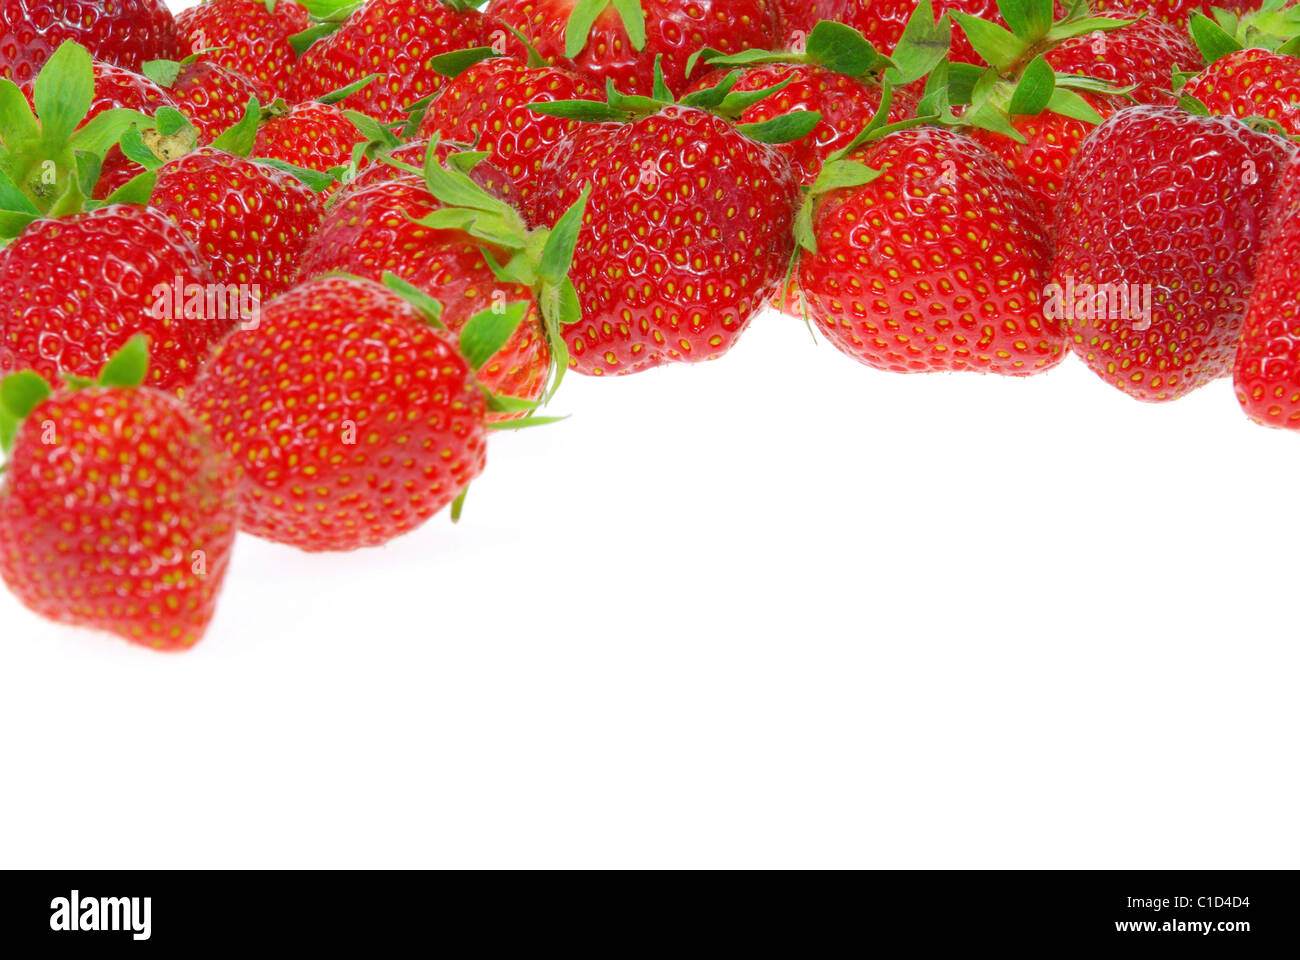 Erdbeere freigestellt - strawberry isolated 13 Stock Photo